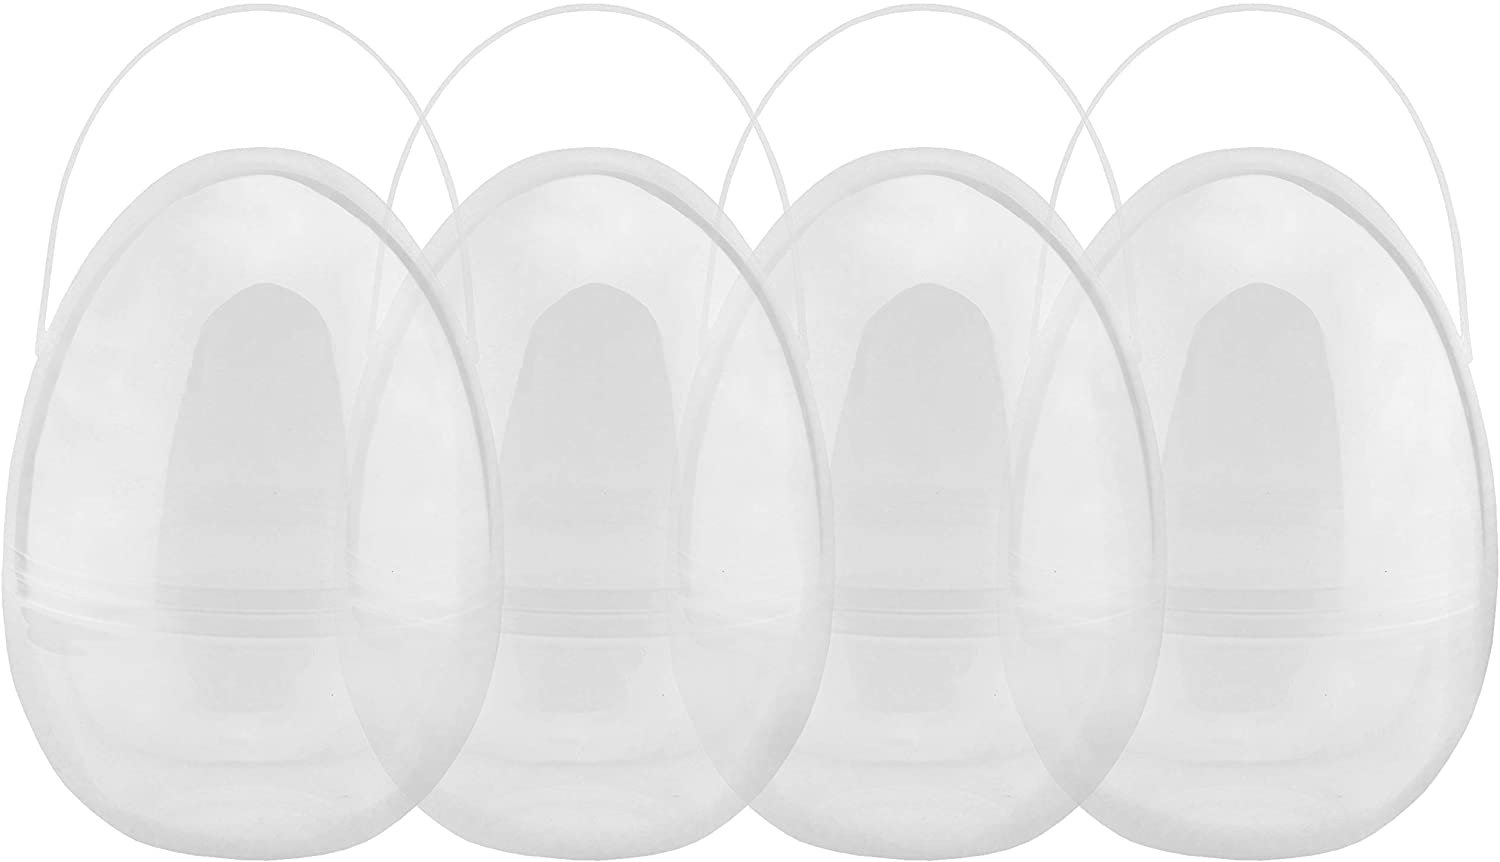 Jumbo Plastic Easter Eggs (12-Pack, 10-Inch) - SH_1411_BUNDLE